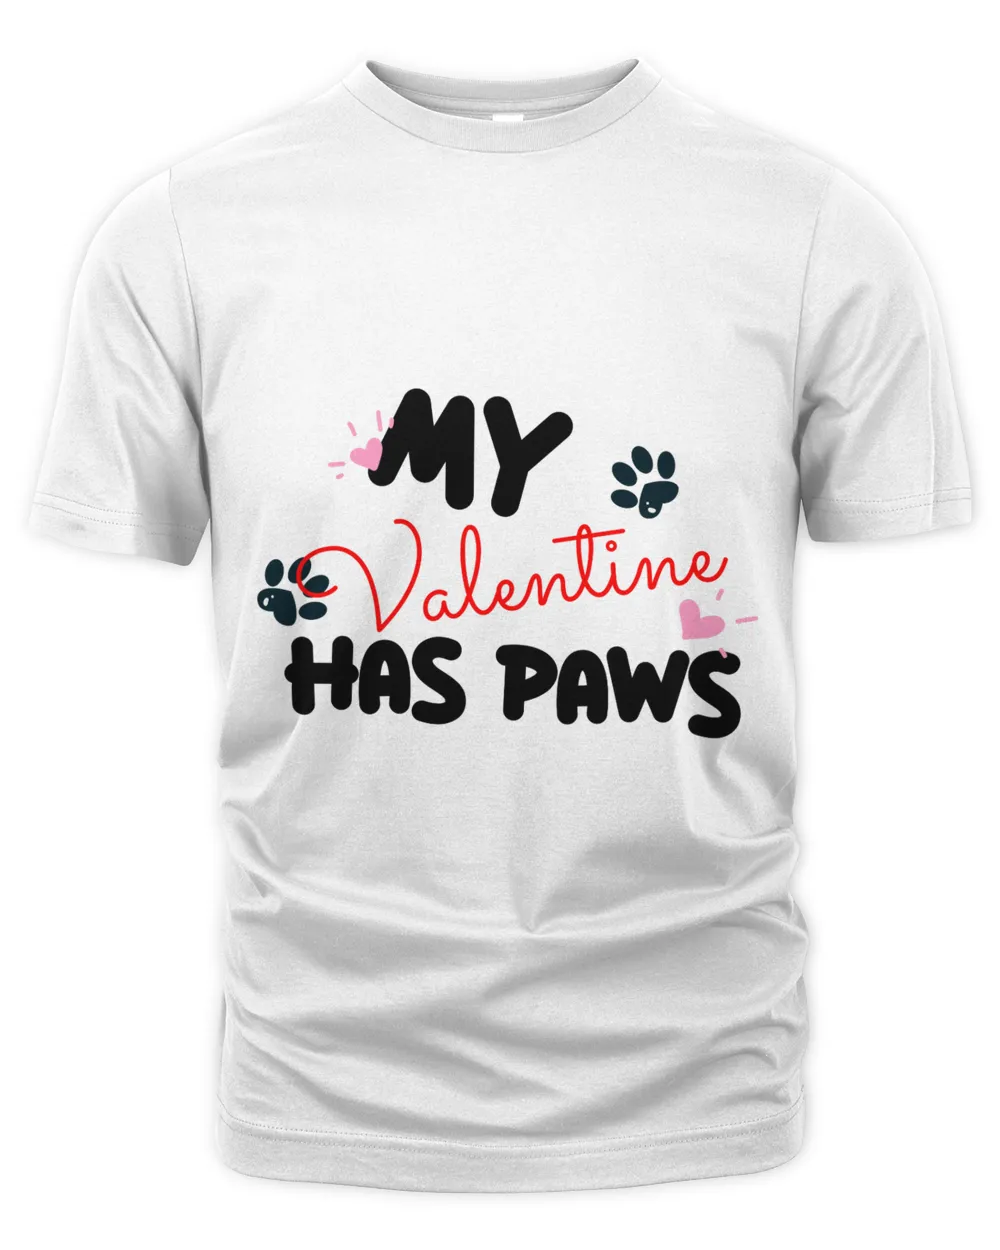 My Valentine Has Paws Shirt, Paw Love Shirt, Valentine's Day Gift, Dog Love Shirt, Dog Lover Gift, Pet Lover Valentines Day Shirt, Cat Mom